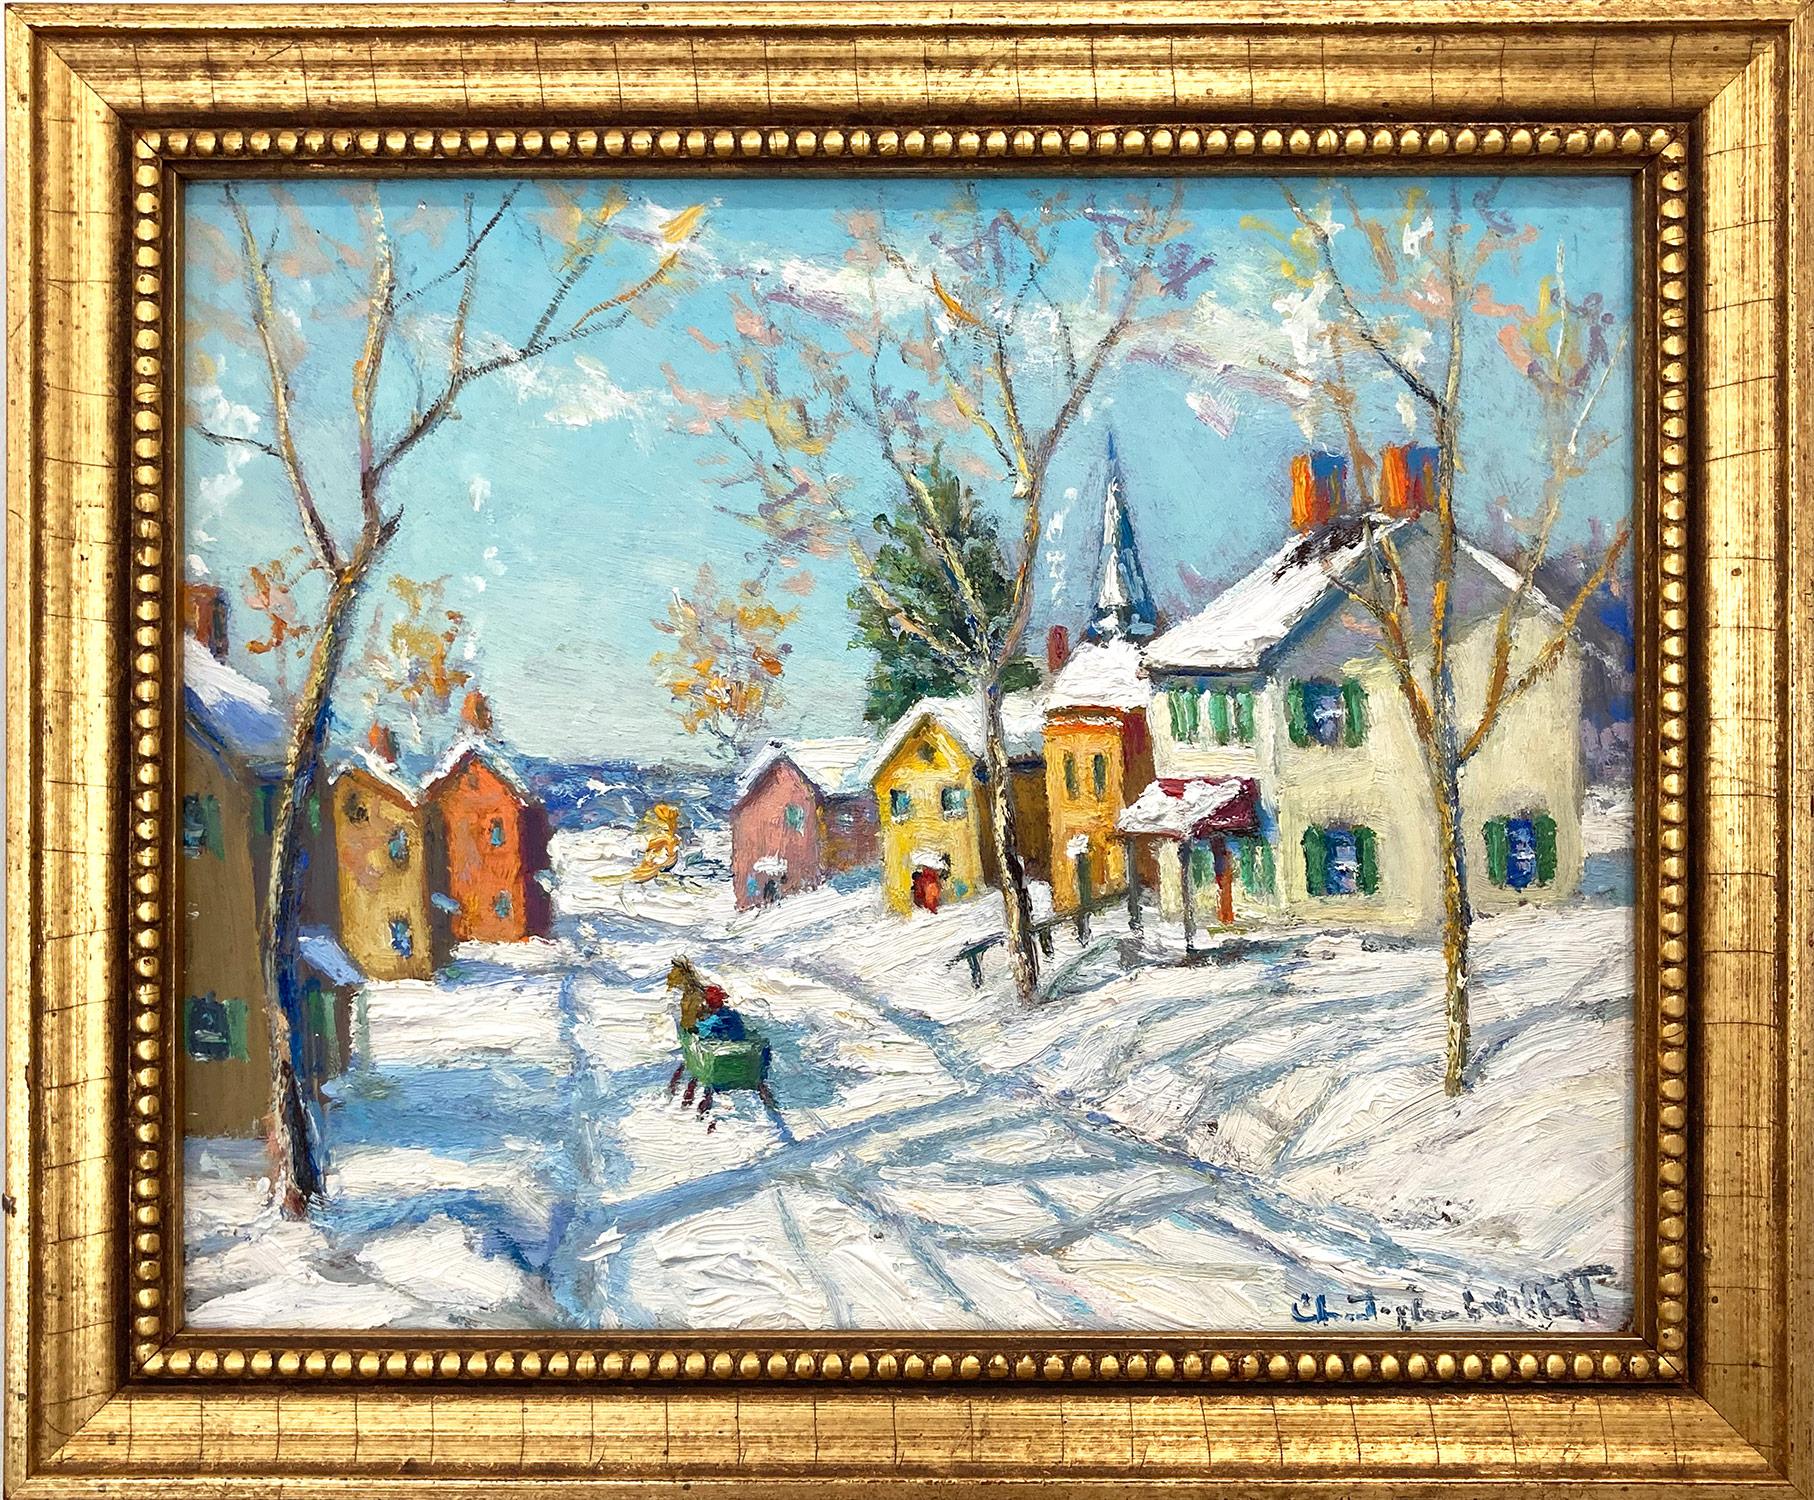 Christopher Willett Figurative Painting - "Rt. 611 Above Revege" Bucks County PA, Pastoral Winter Landscape Oil Painting